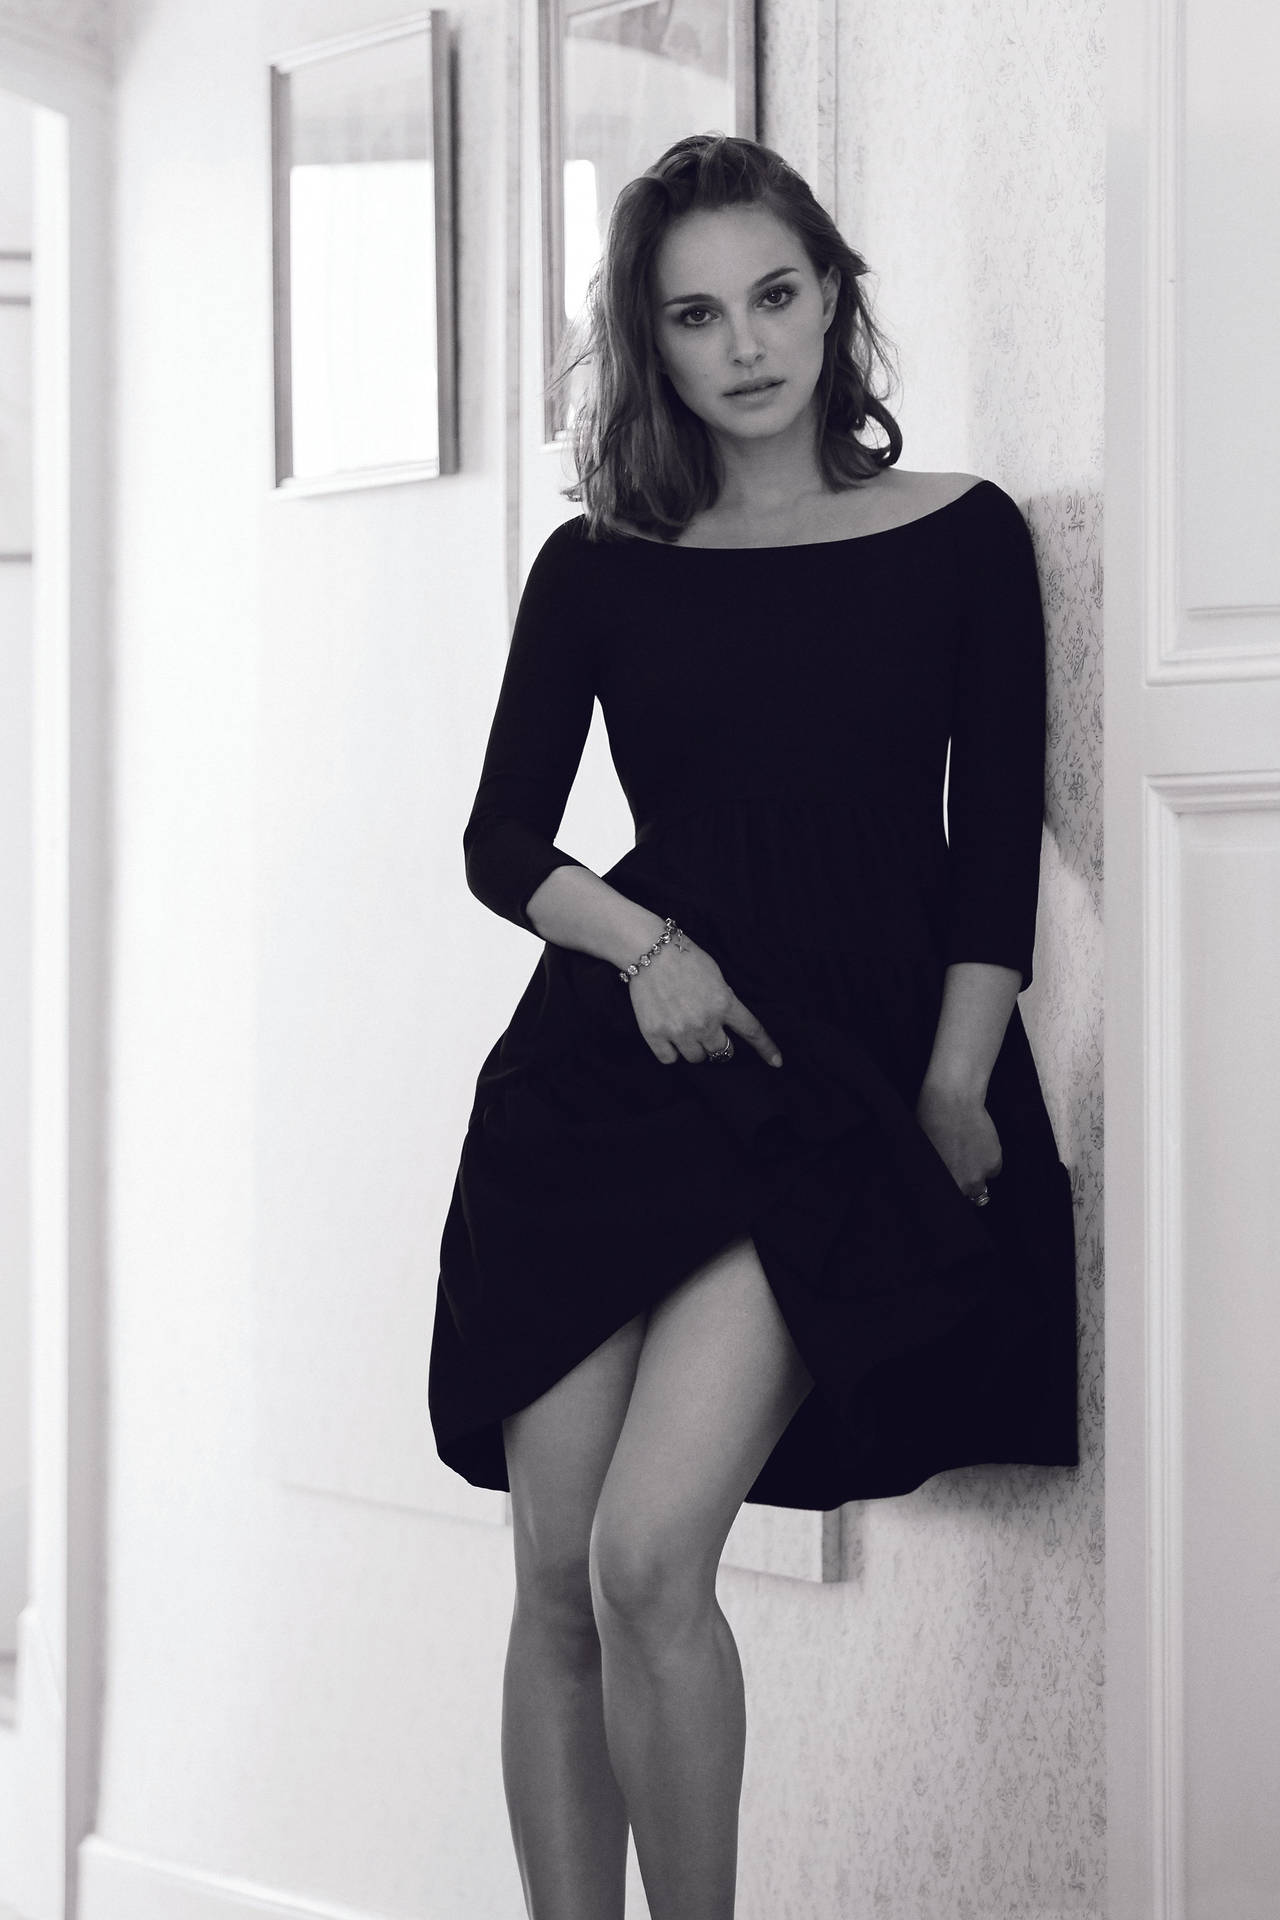 Beautiful Natalie Portman Posing Elegantly In A Candid Portrait Background